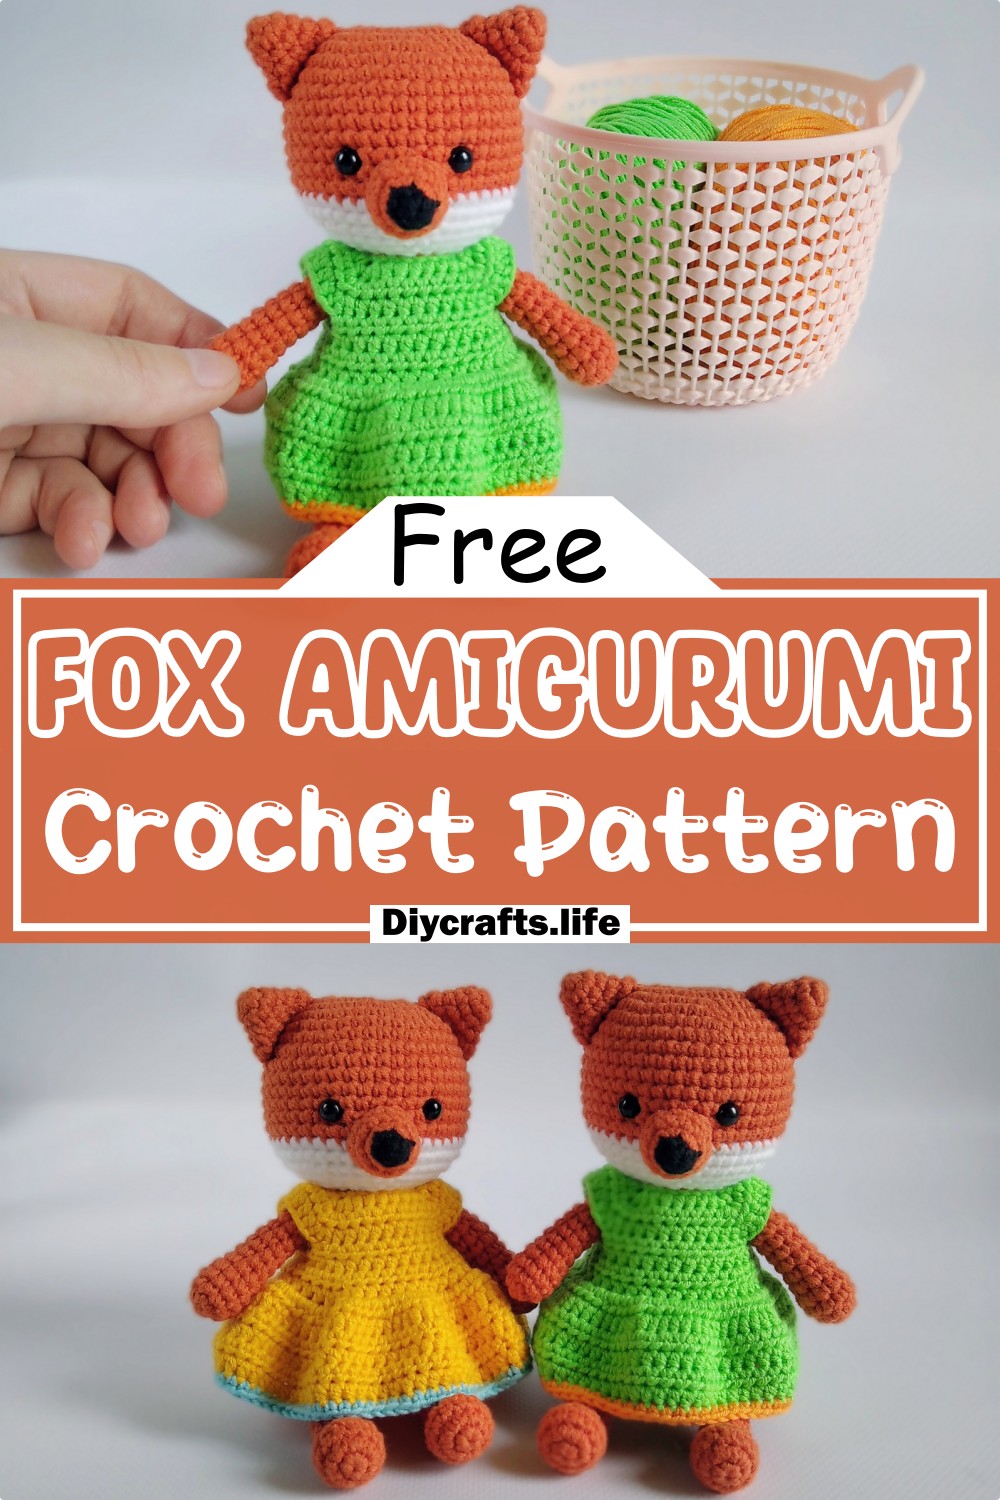 Crochet Fox Amigurumi